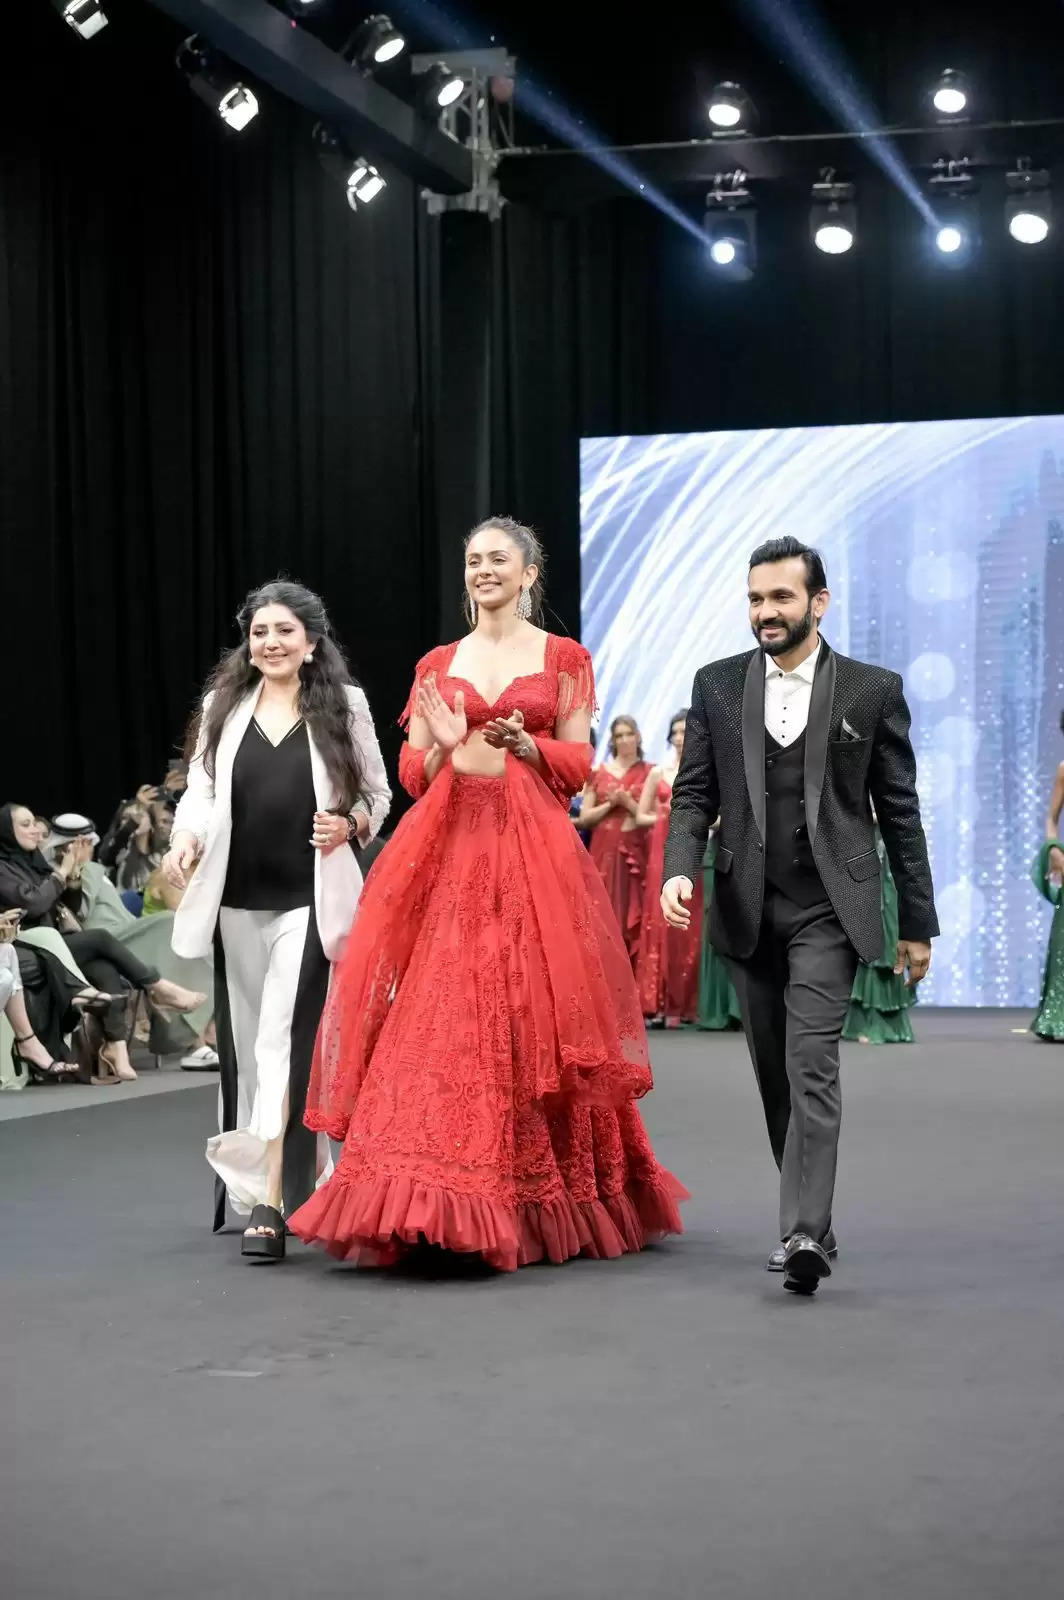 Rakul Preet Singh turns showstopper at International Fashion Week Dubai for Archana Kochhar's "Bollywood Bling" Collection